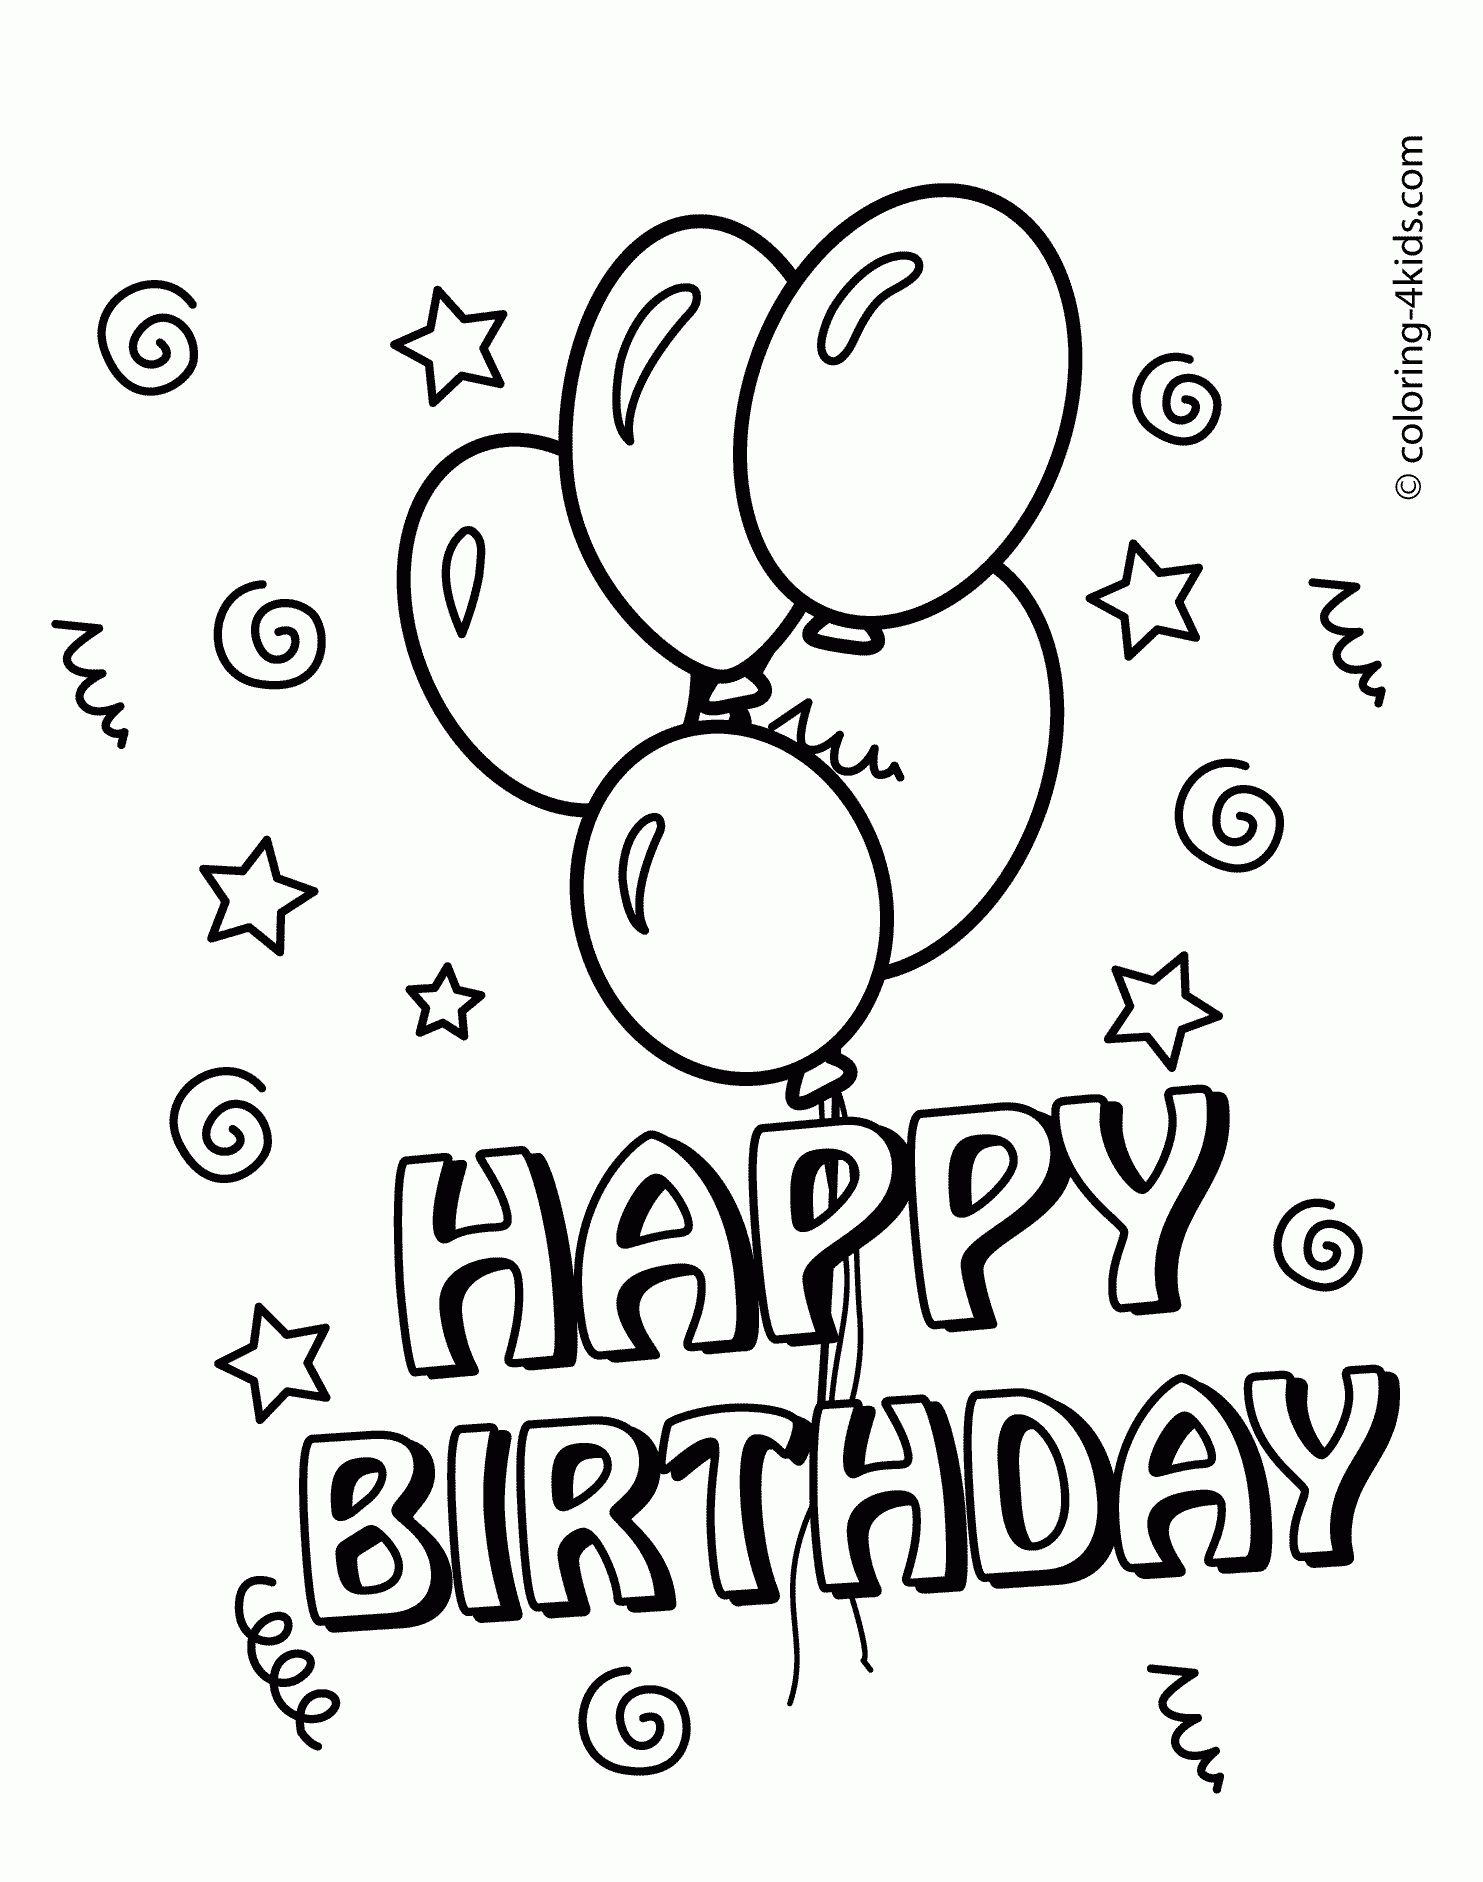 Happy Birthday Coloring Pages With Balloons For Kids bei Happy Birthday Schriftzug Zum Ausmalen